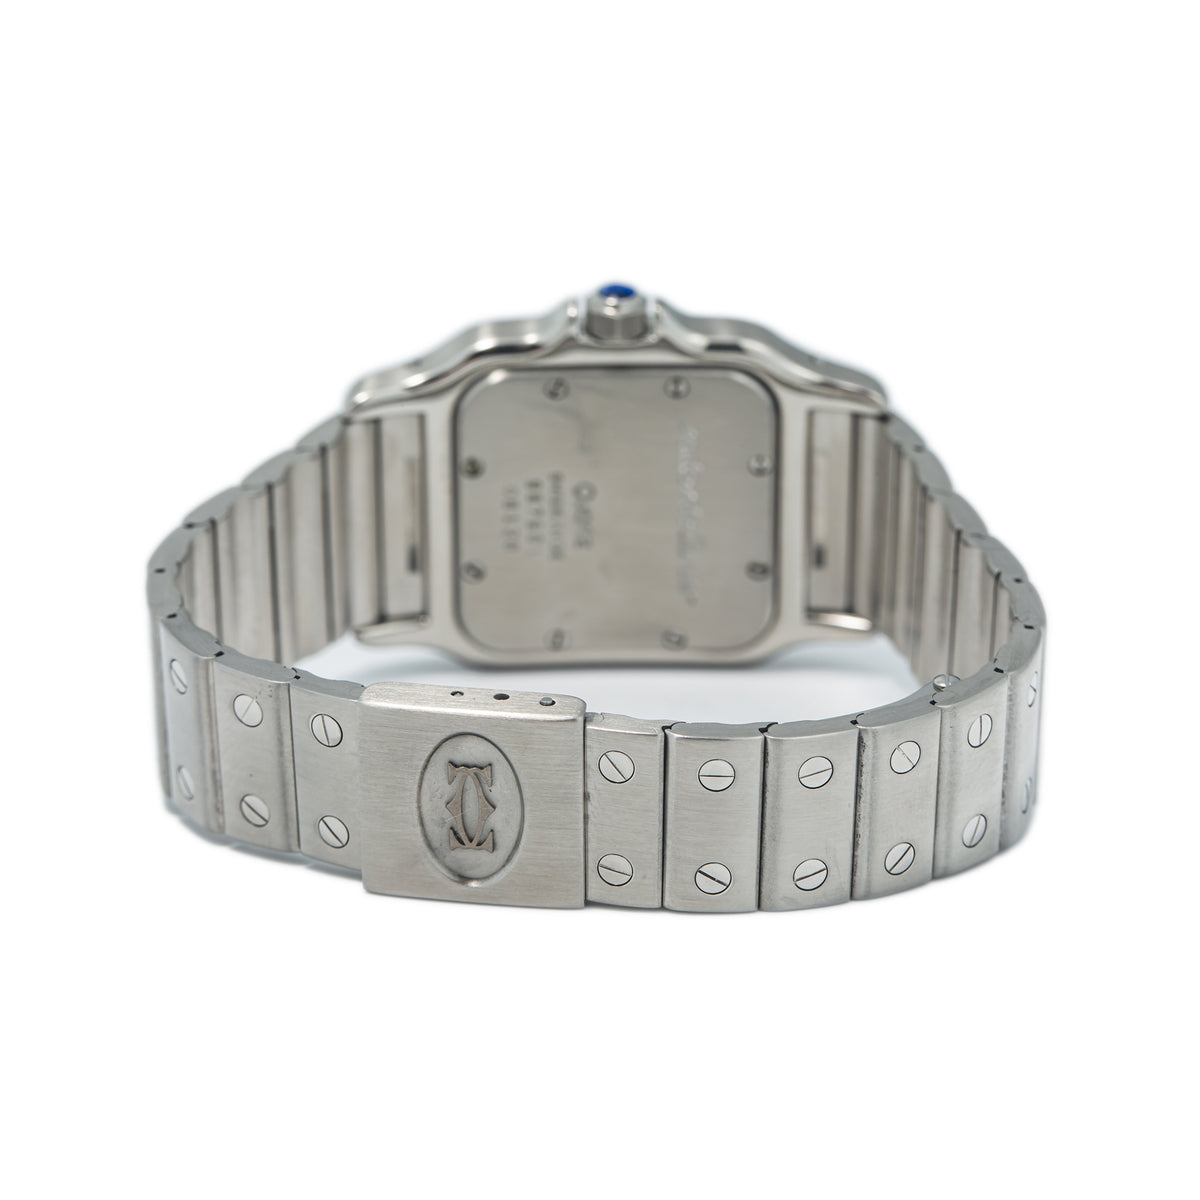 Cartier Santos Galbee 987901 Date Cream Blue Roman Dial Steel Quartz Watch 29mm